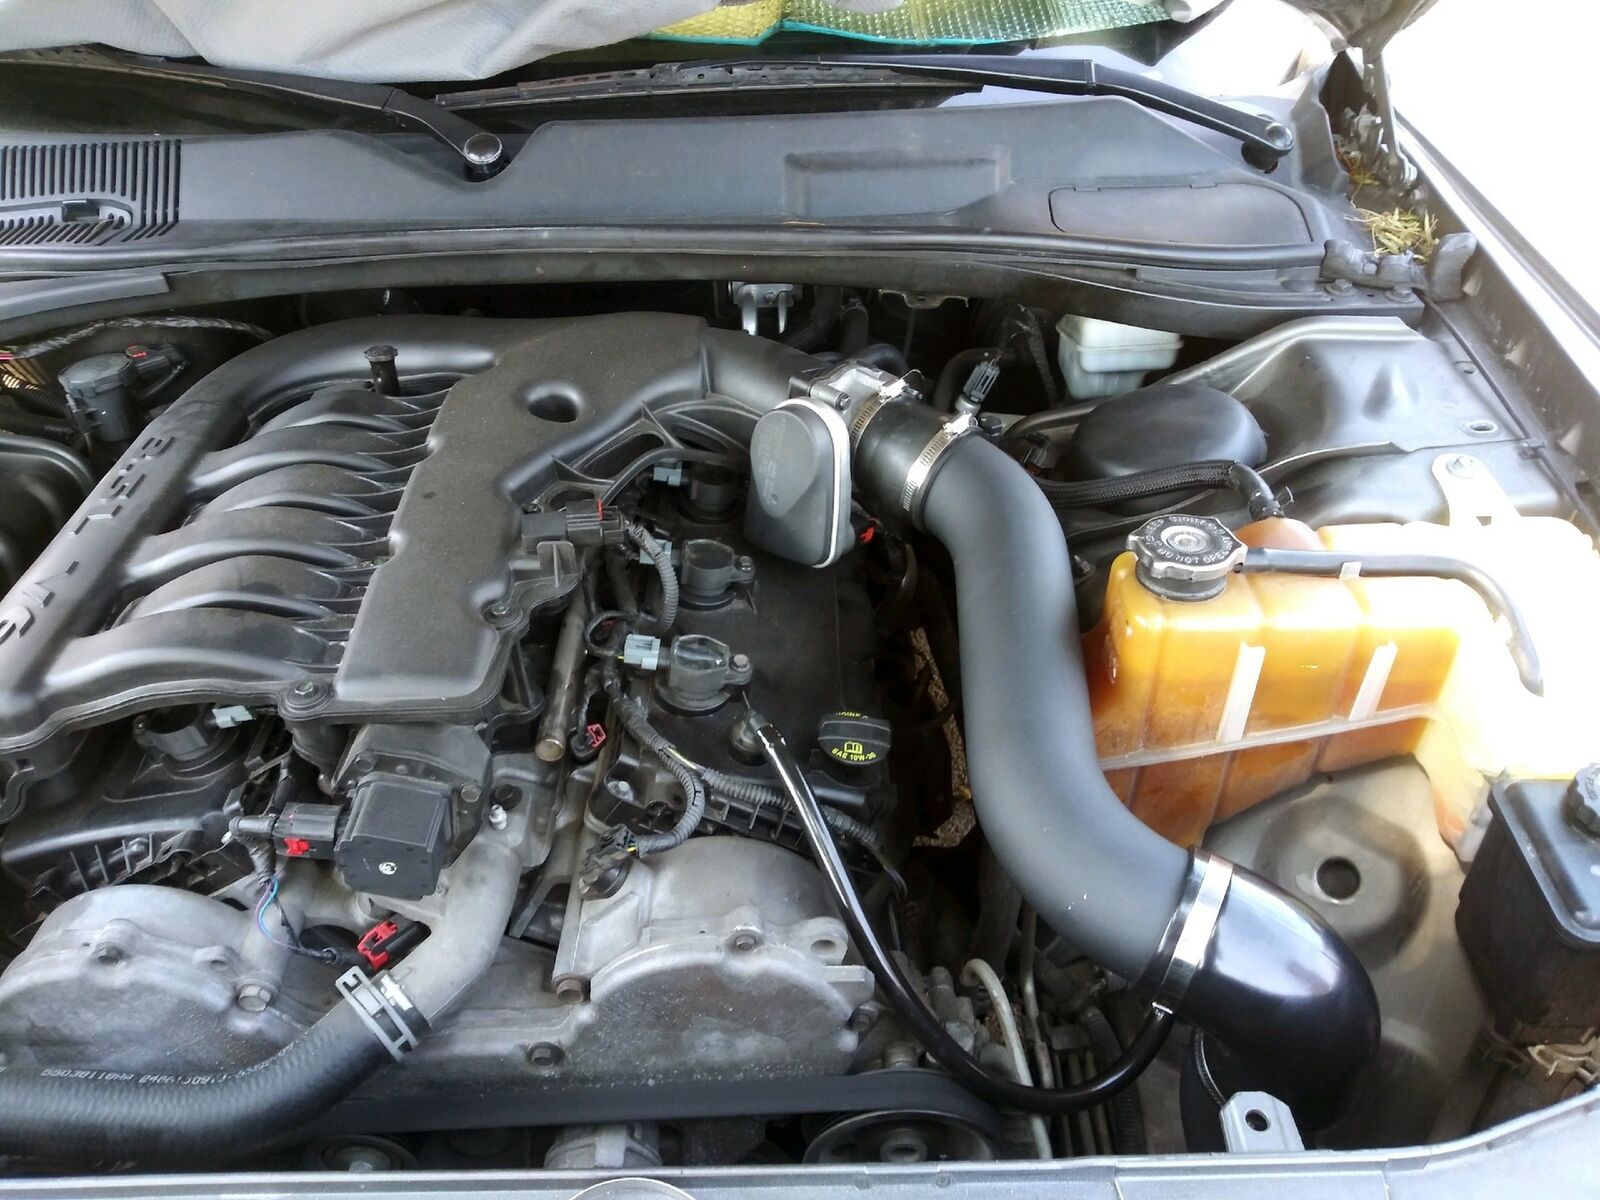 All BLACK COATED 2PC Cold Air Intake Kit For 05-10 Chrysler 300 Touring3.5 V6